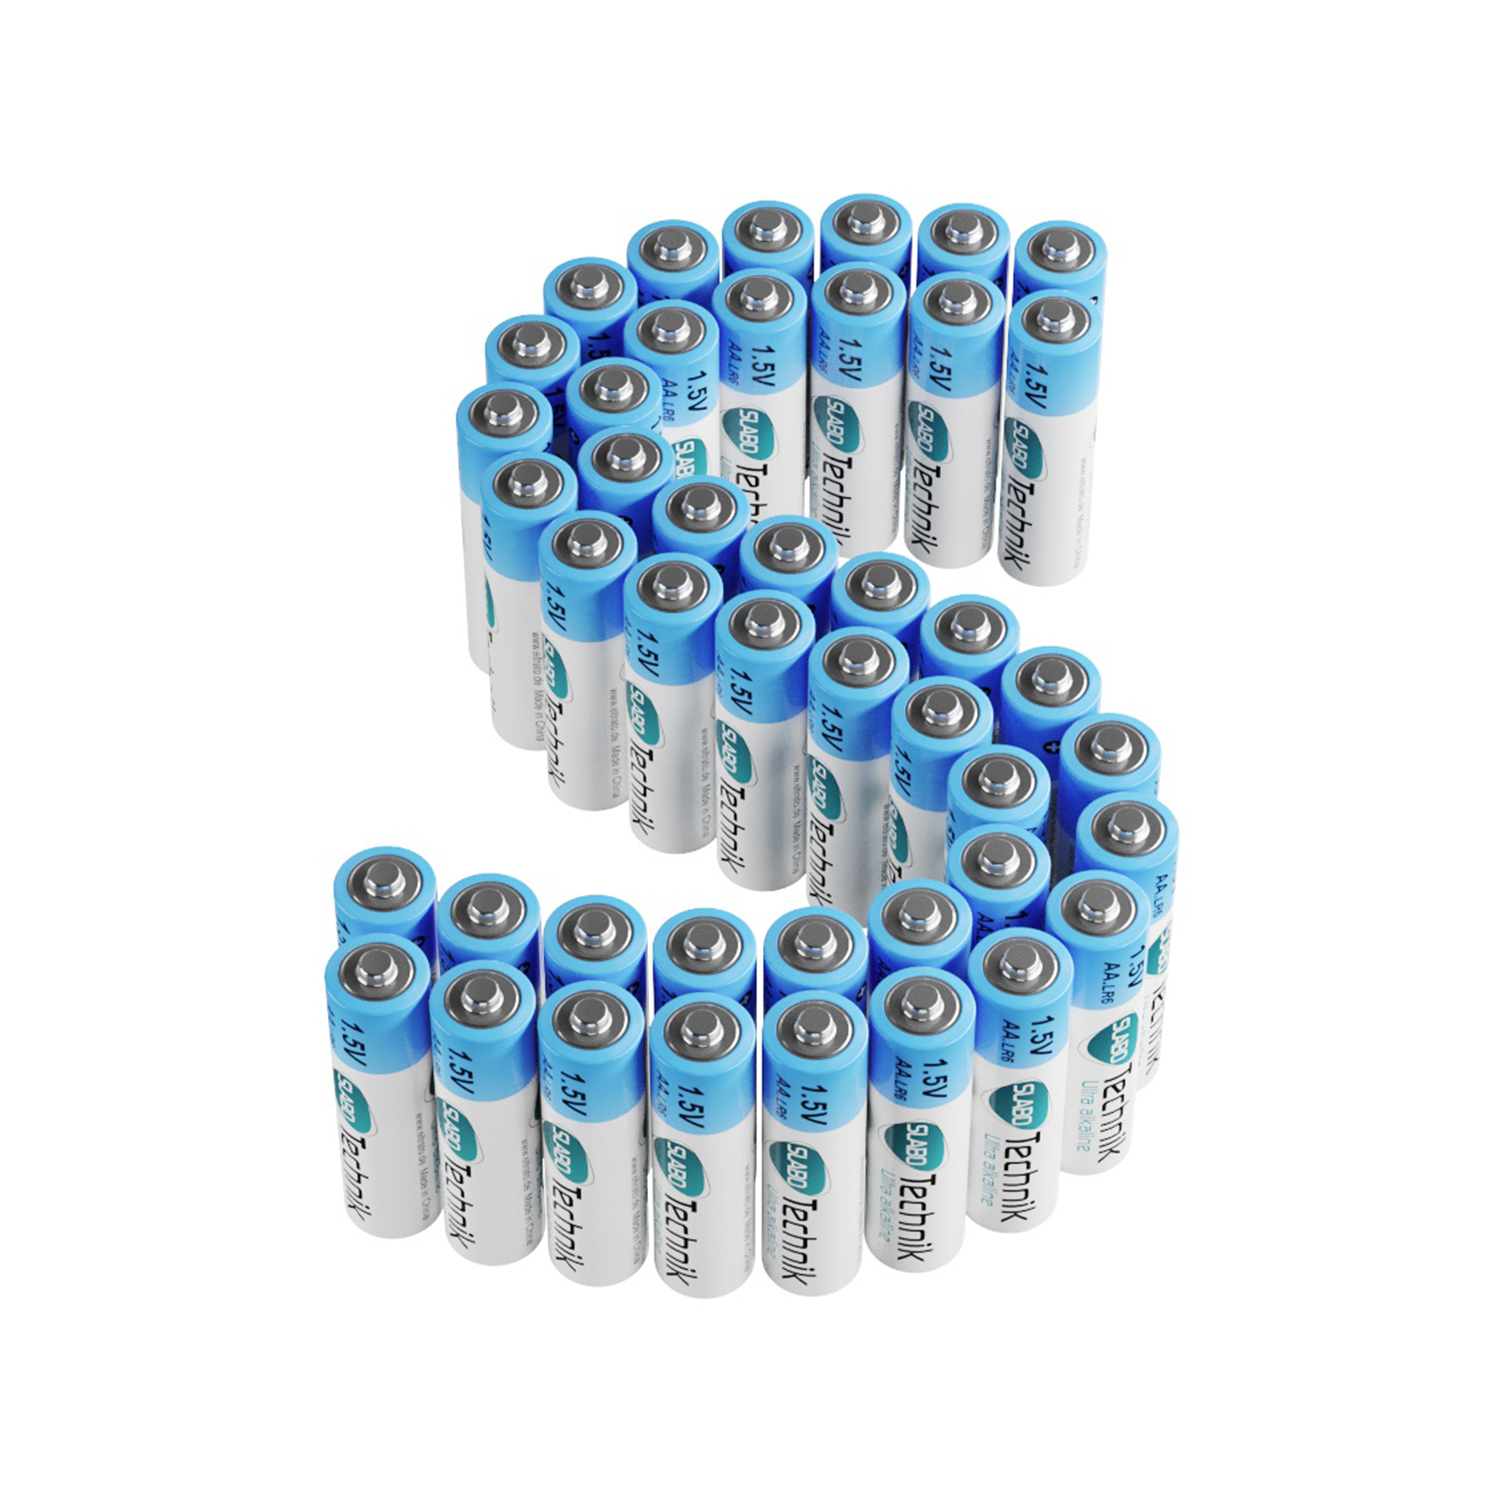 JAHRE LR03 Batterie Micro Alkaline Einwegbatterie 10 44er-Pack Haltbarkeit AAA - - | 1.5V SLABO Battery